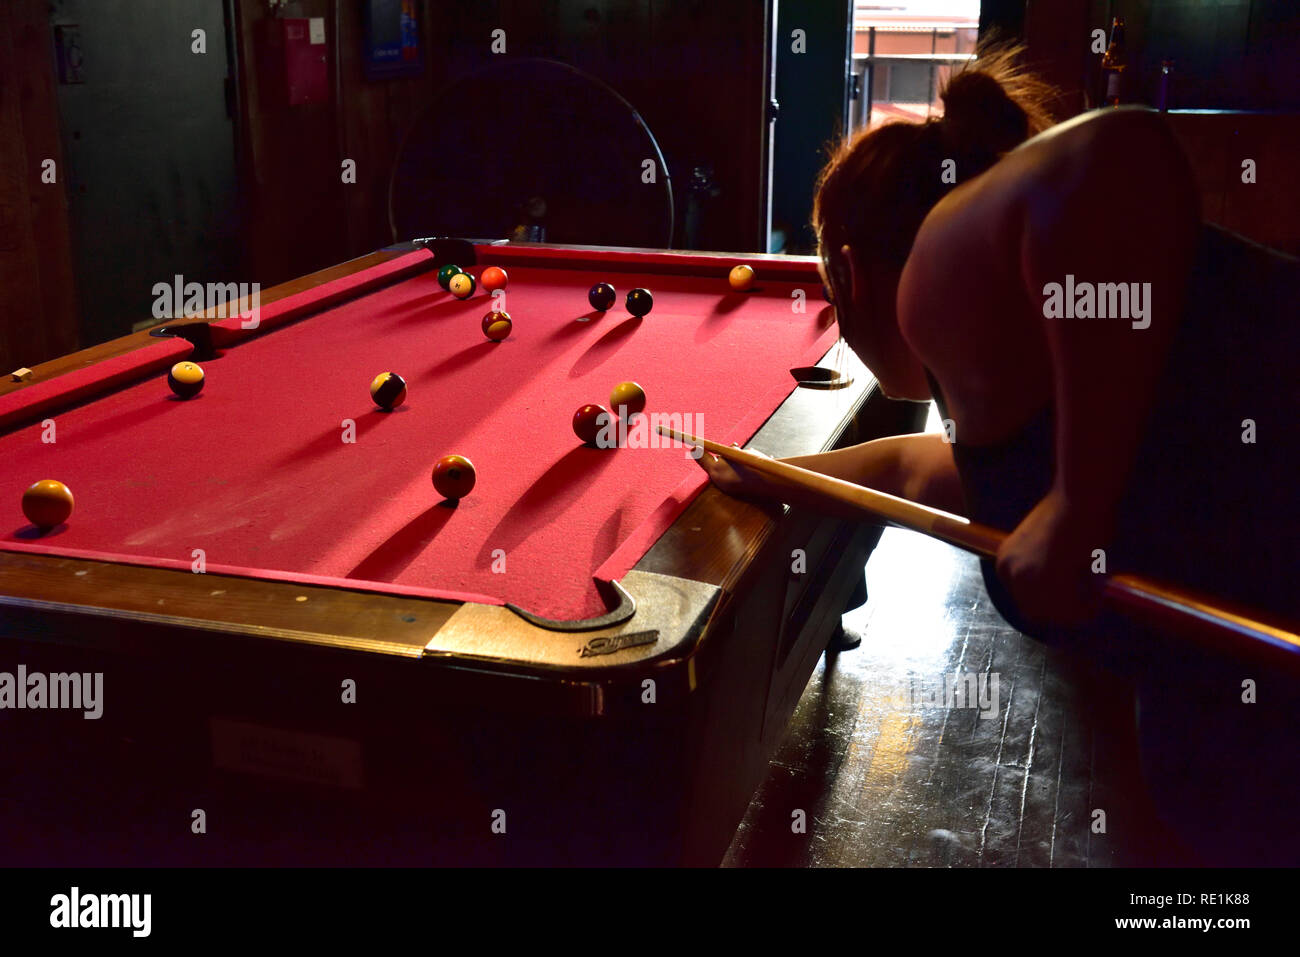 Junge Frau spielen Pool im Saloon Bar Stockfoto